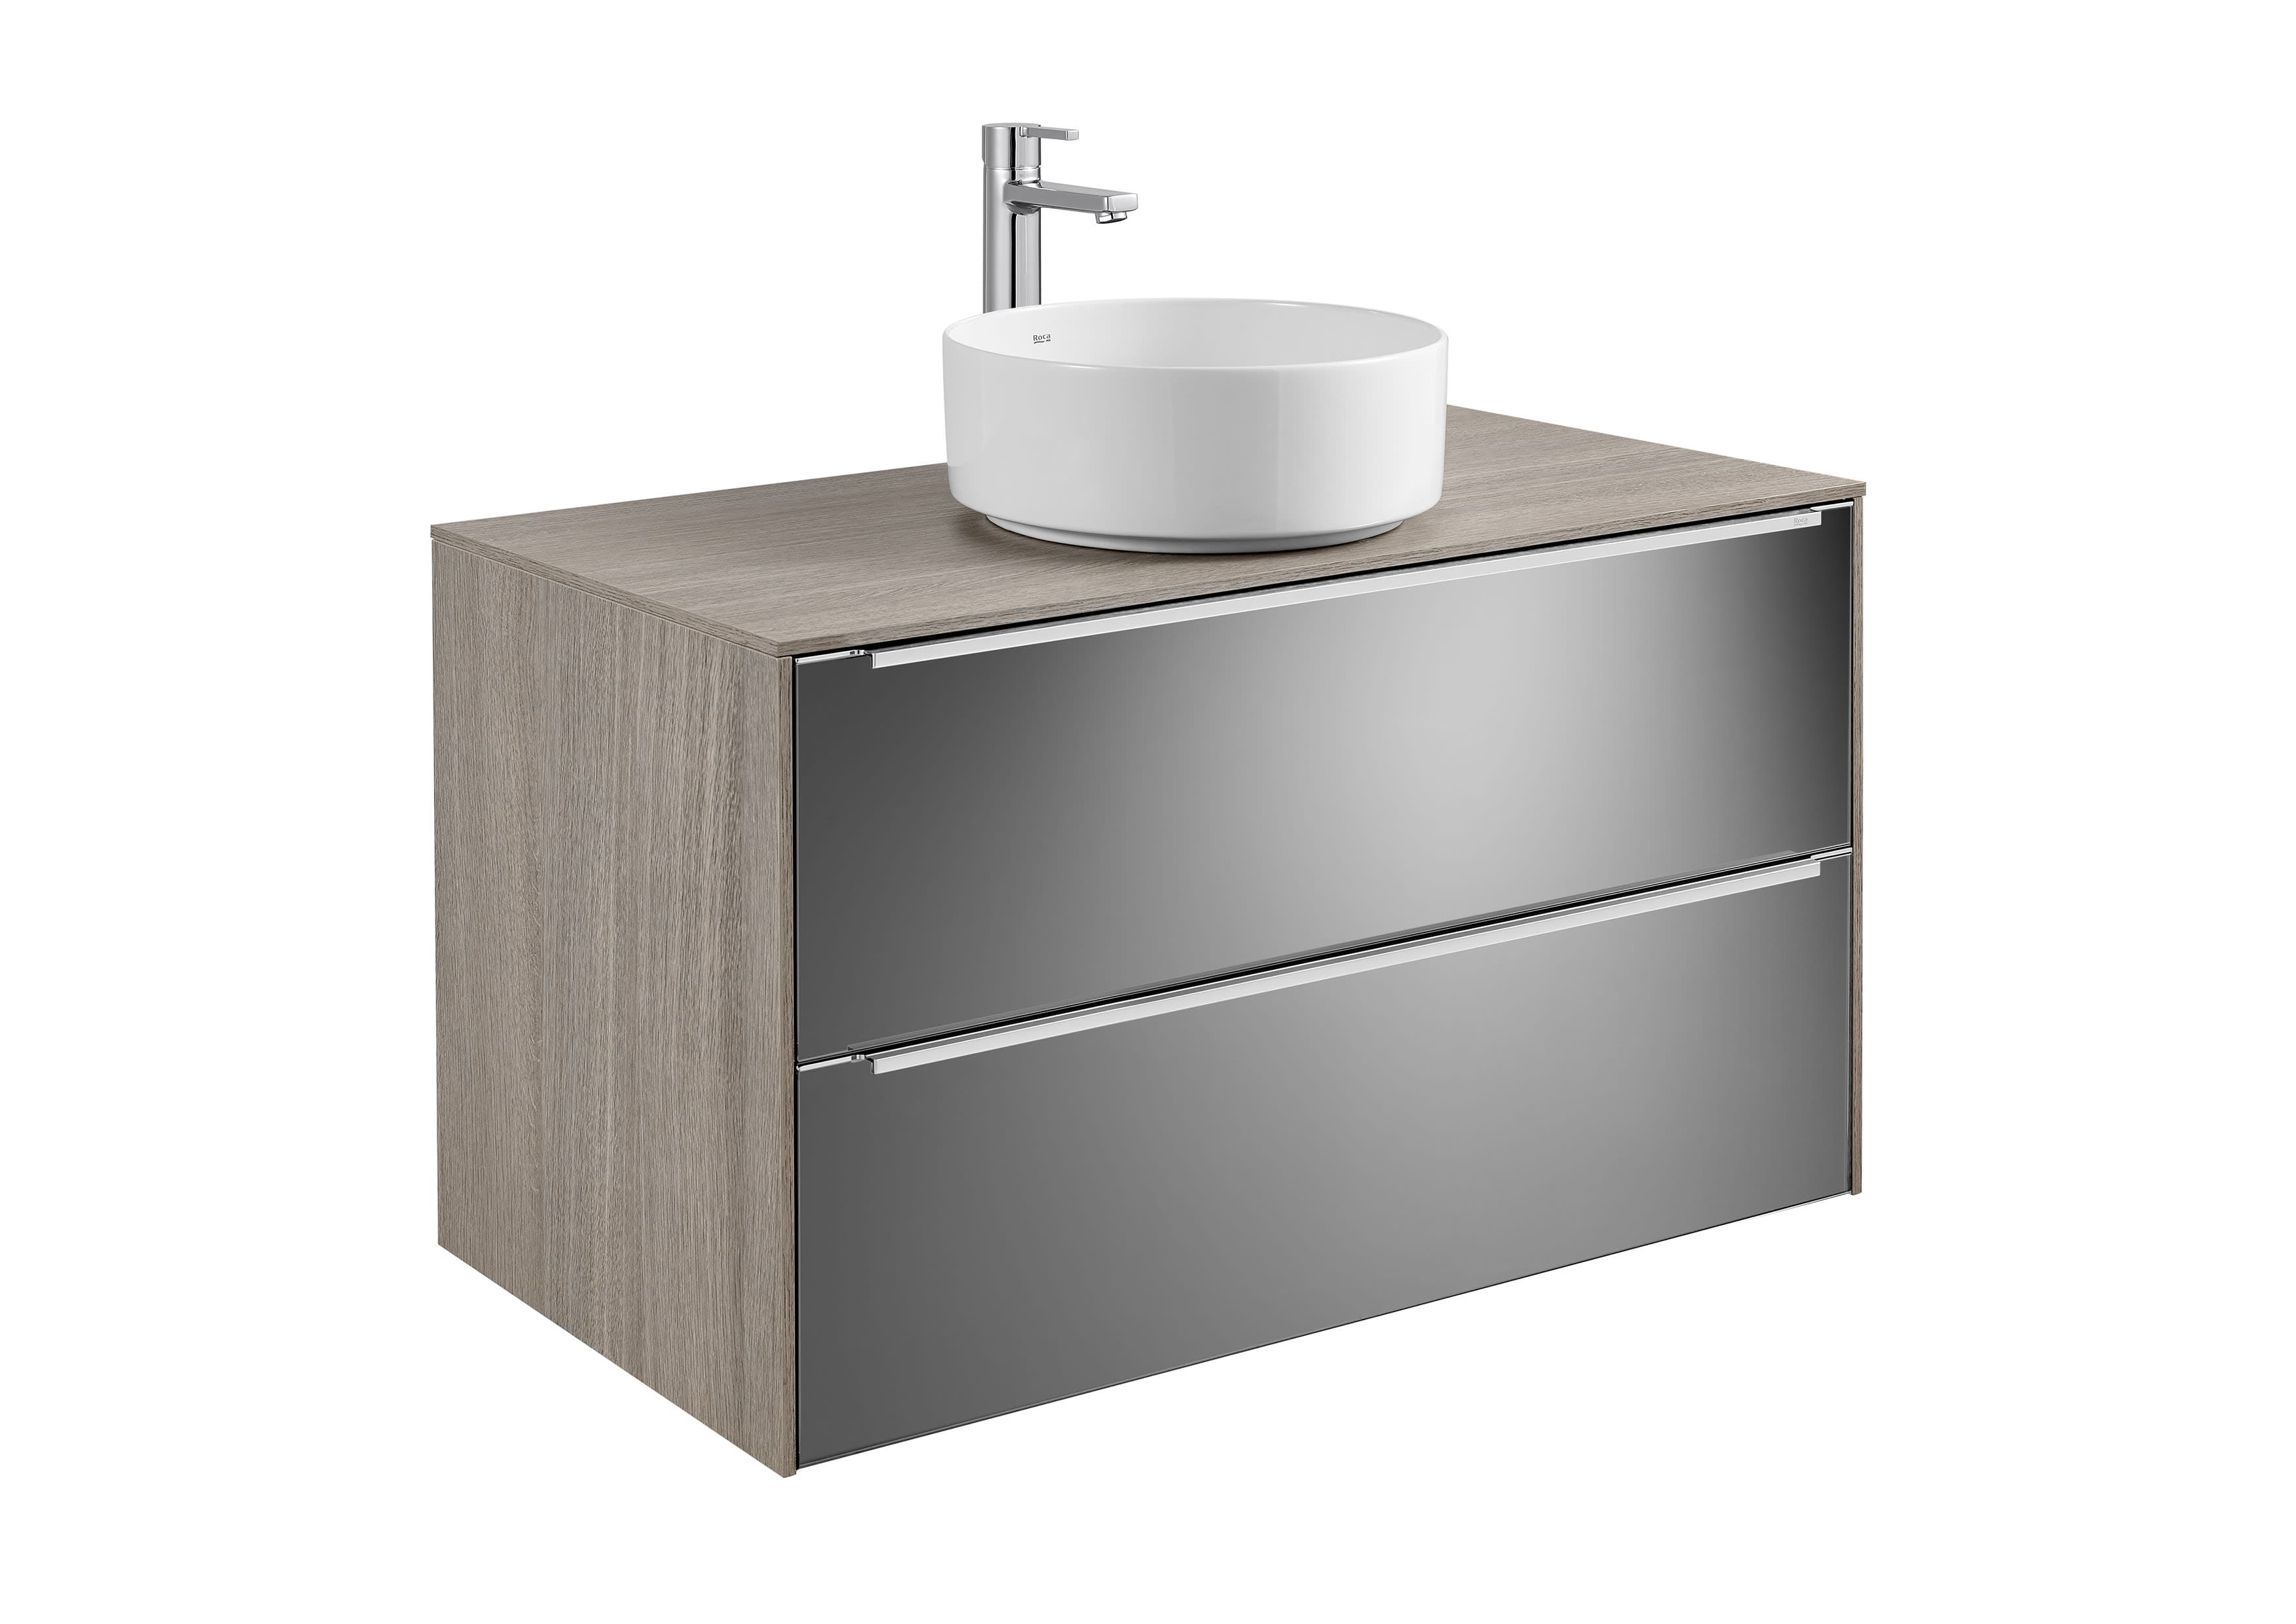 Sanitaire Meubles Salle de bain INSPIRA A851081402 Meuble 2 tiroirs avec plan pour vasque à poser Roca 7 - Mirage ceramica